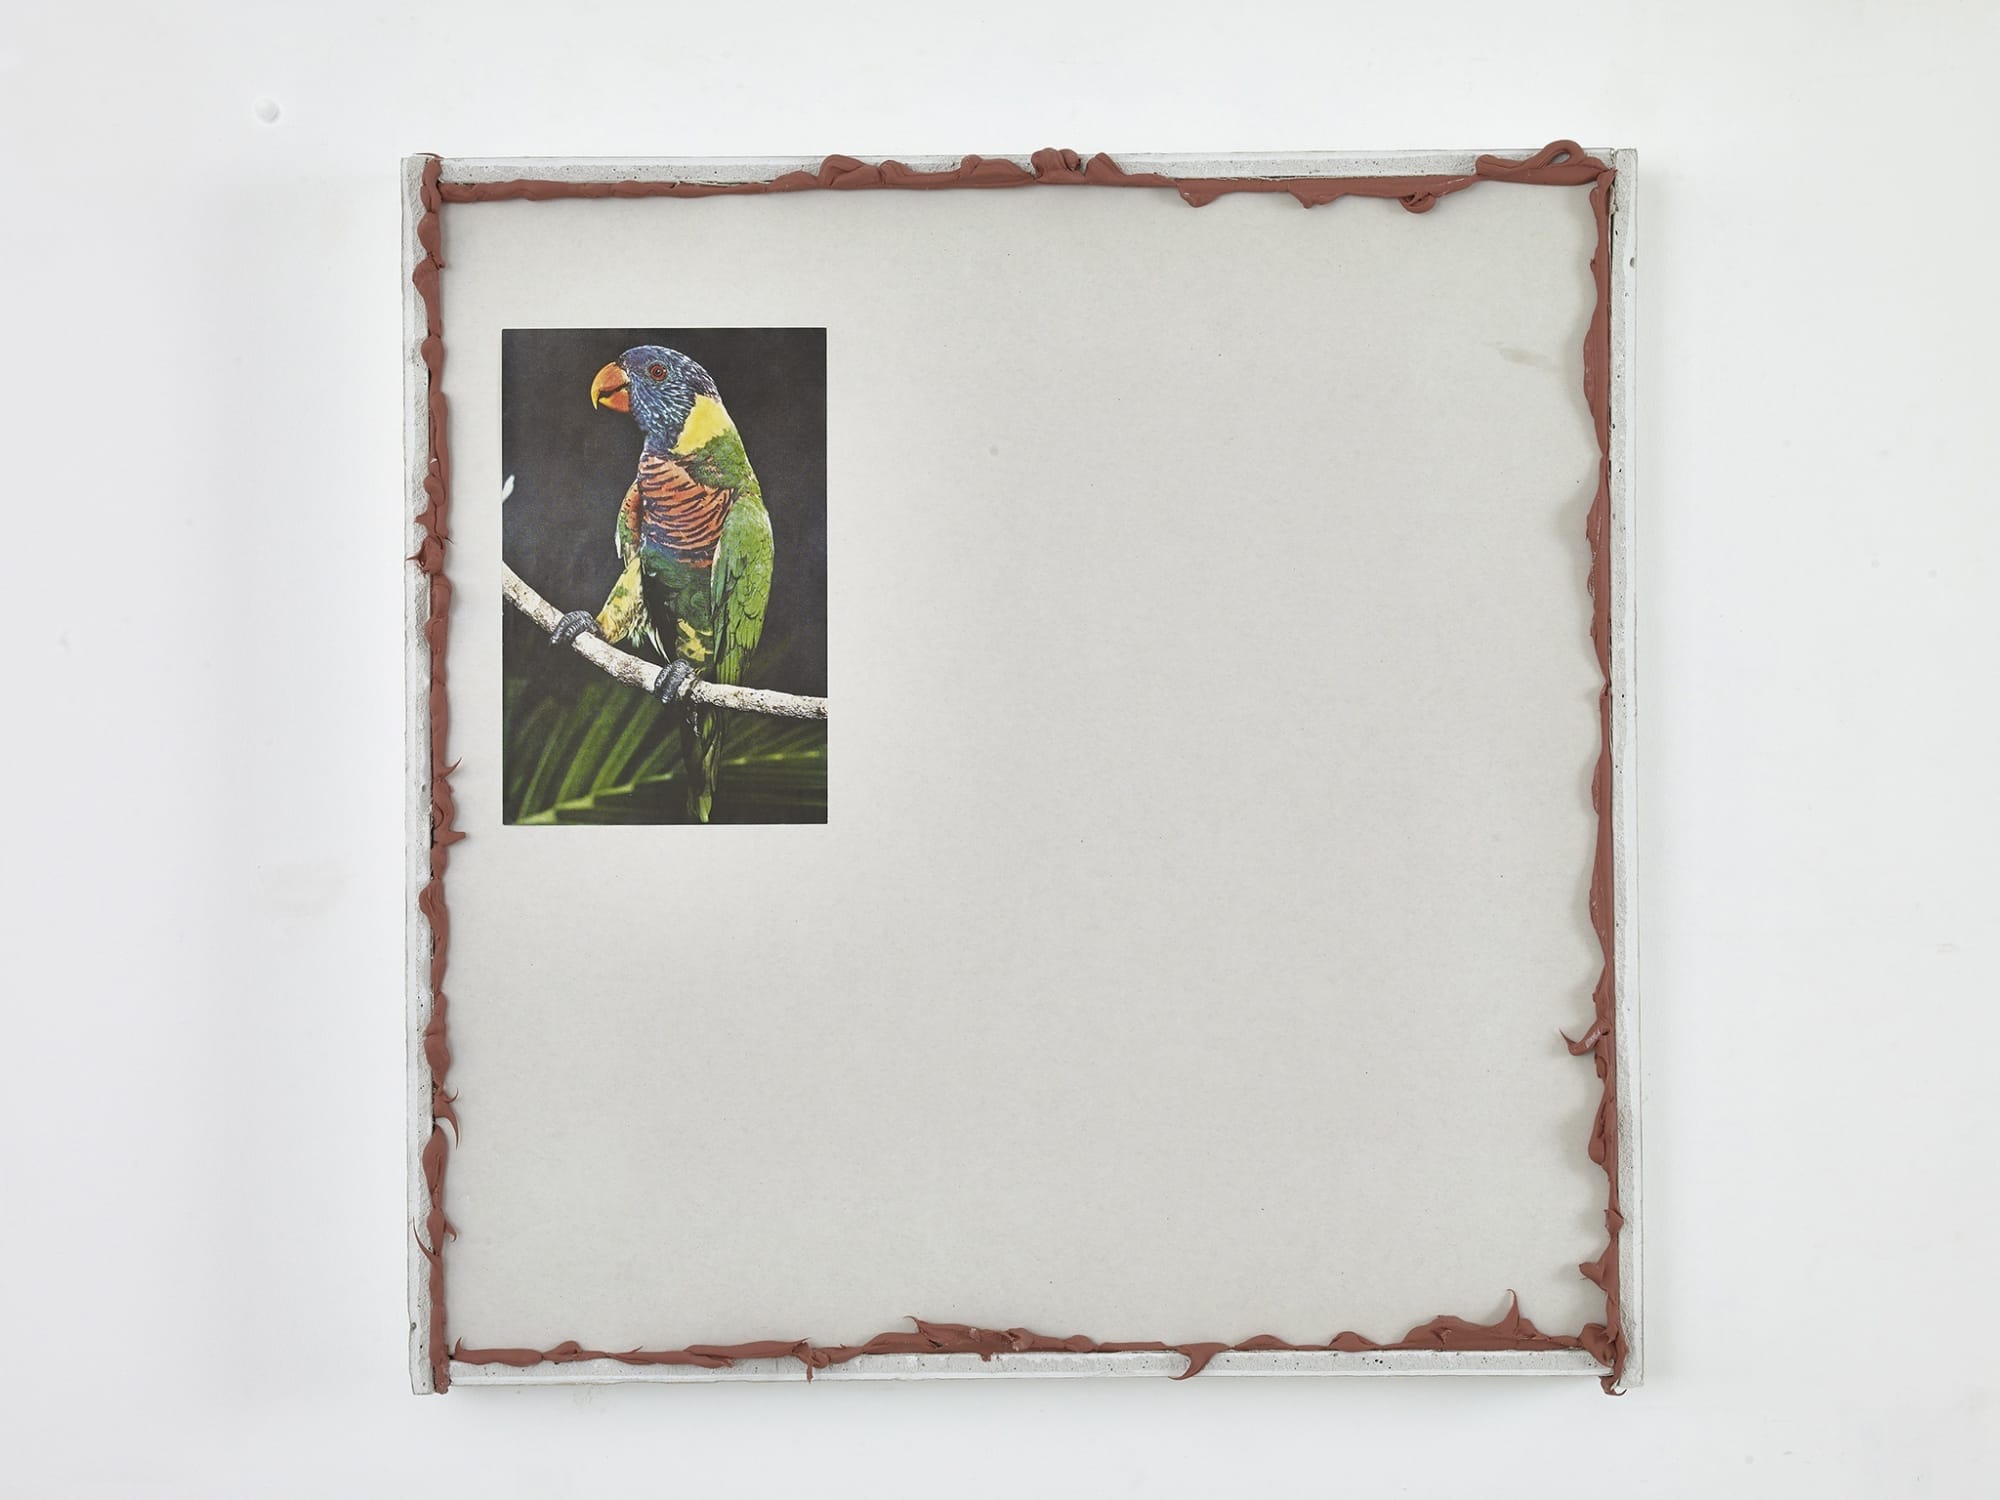 Paul Merrick Untitled (Parrot), 2015